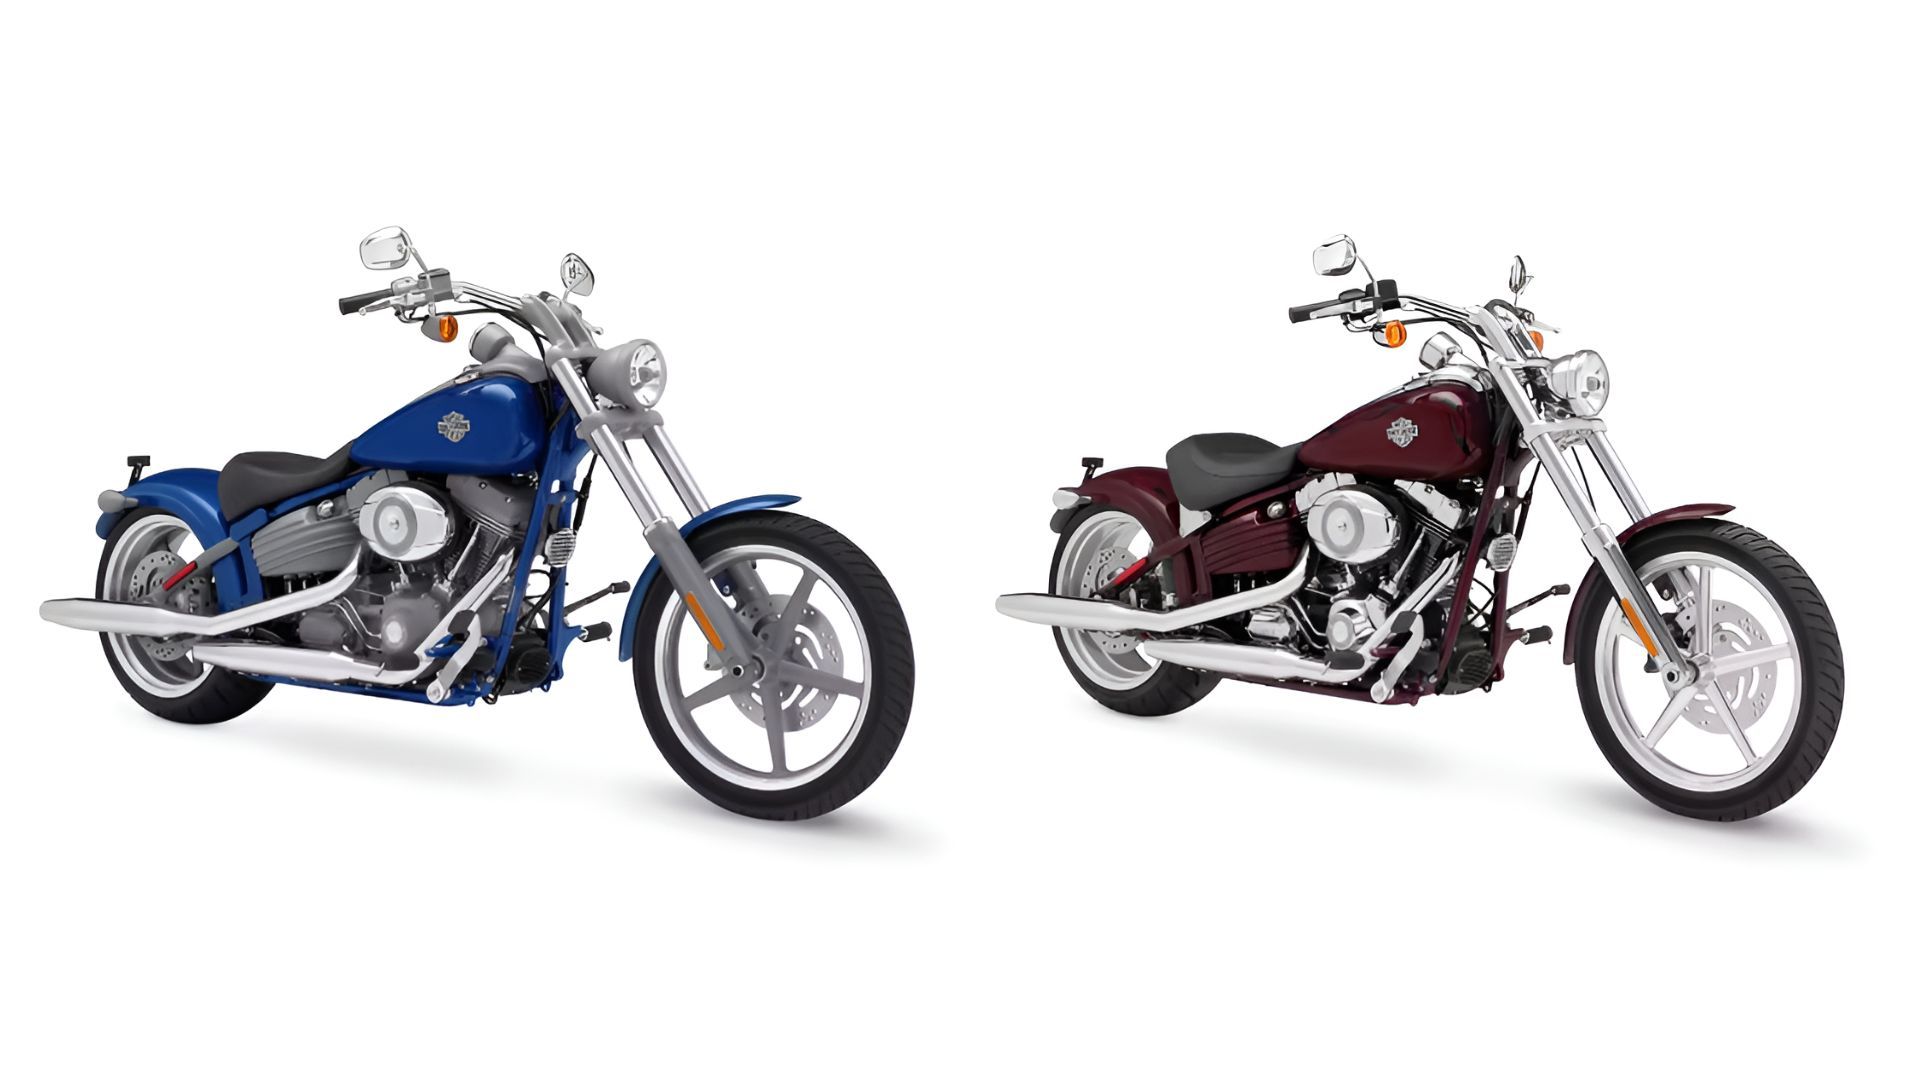 Harley-Davidson Rocker Vs Rocker C differences